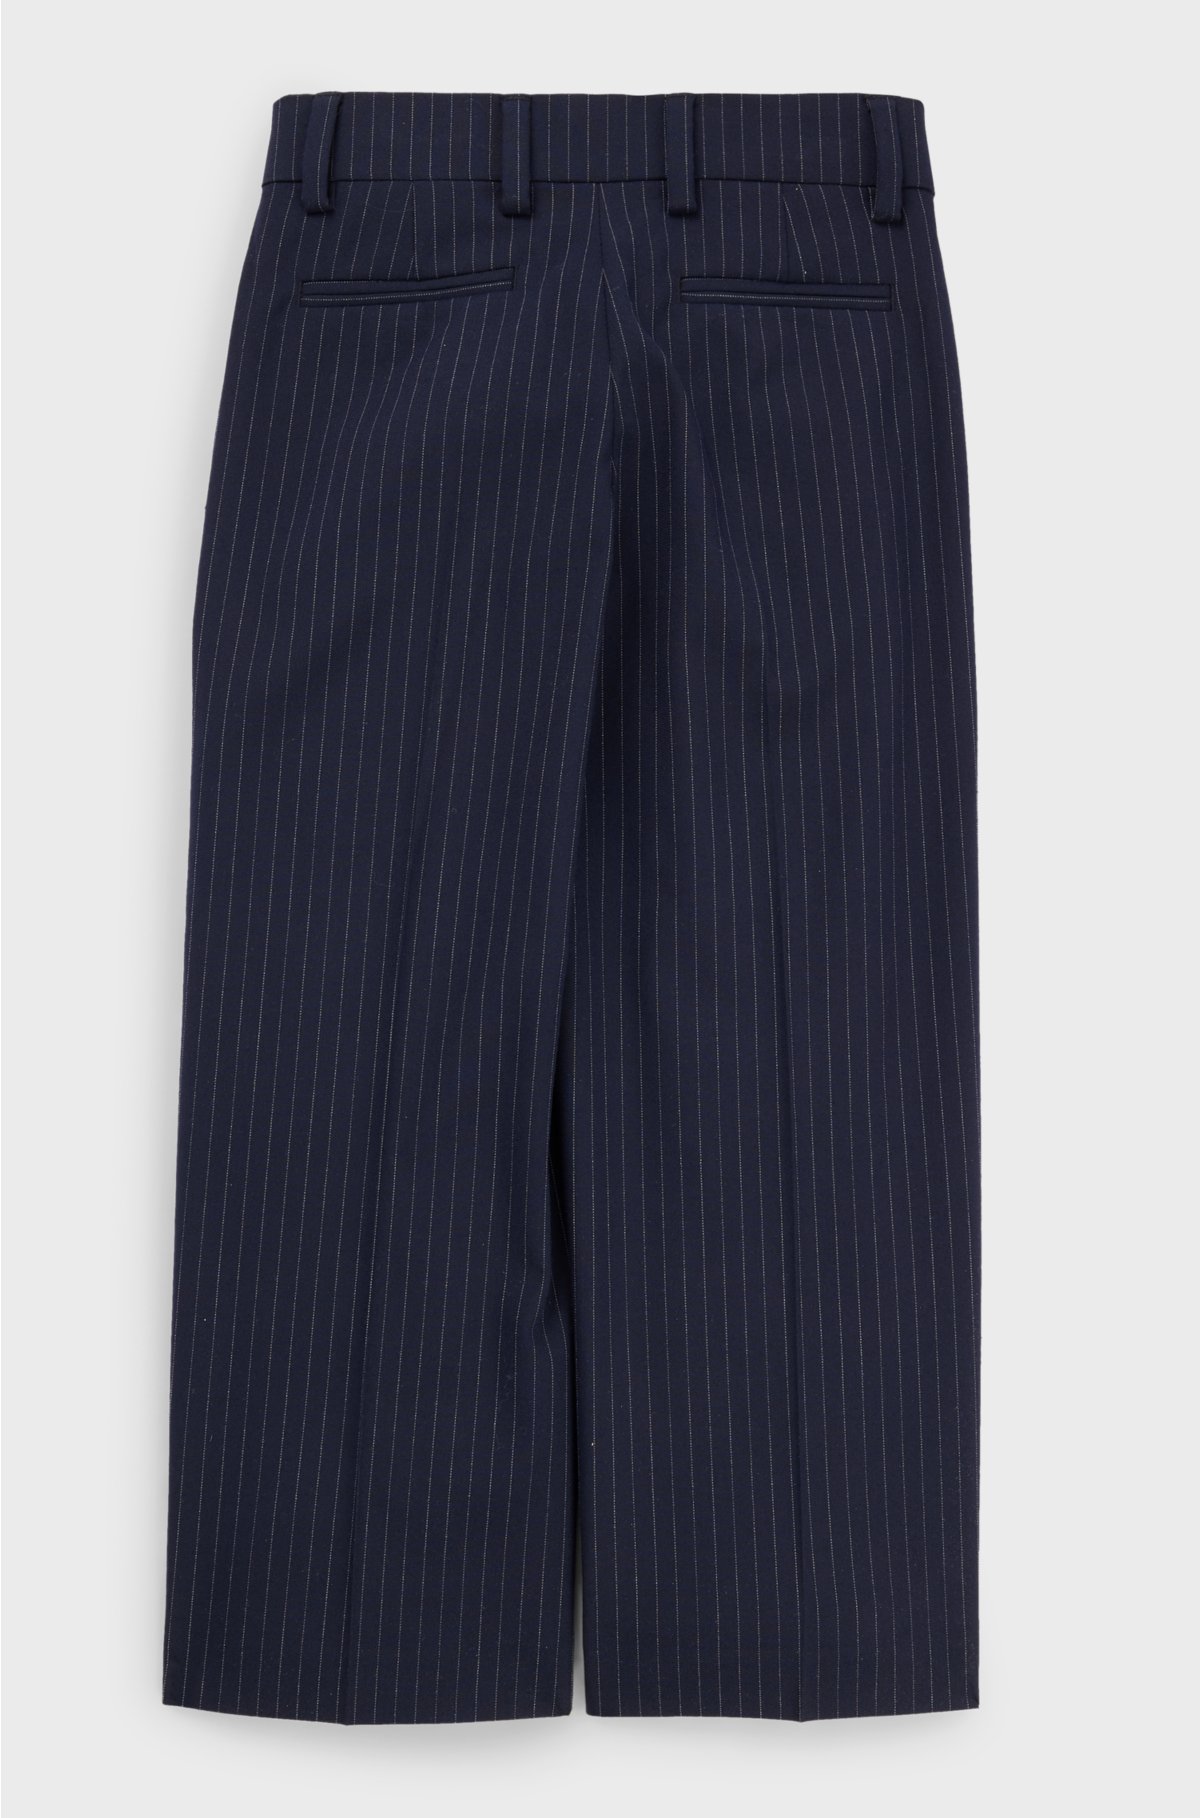 Kids' suit trousers in striped stretch fabric, Dark Blue